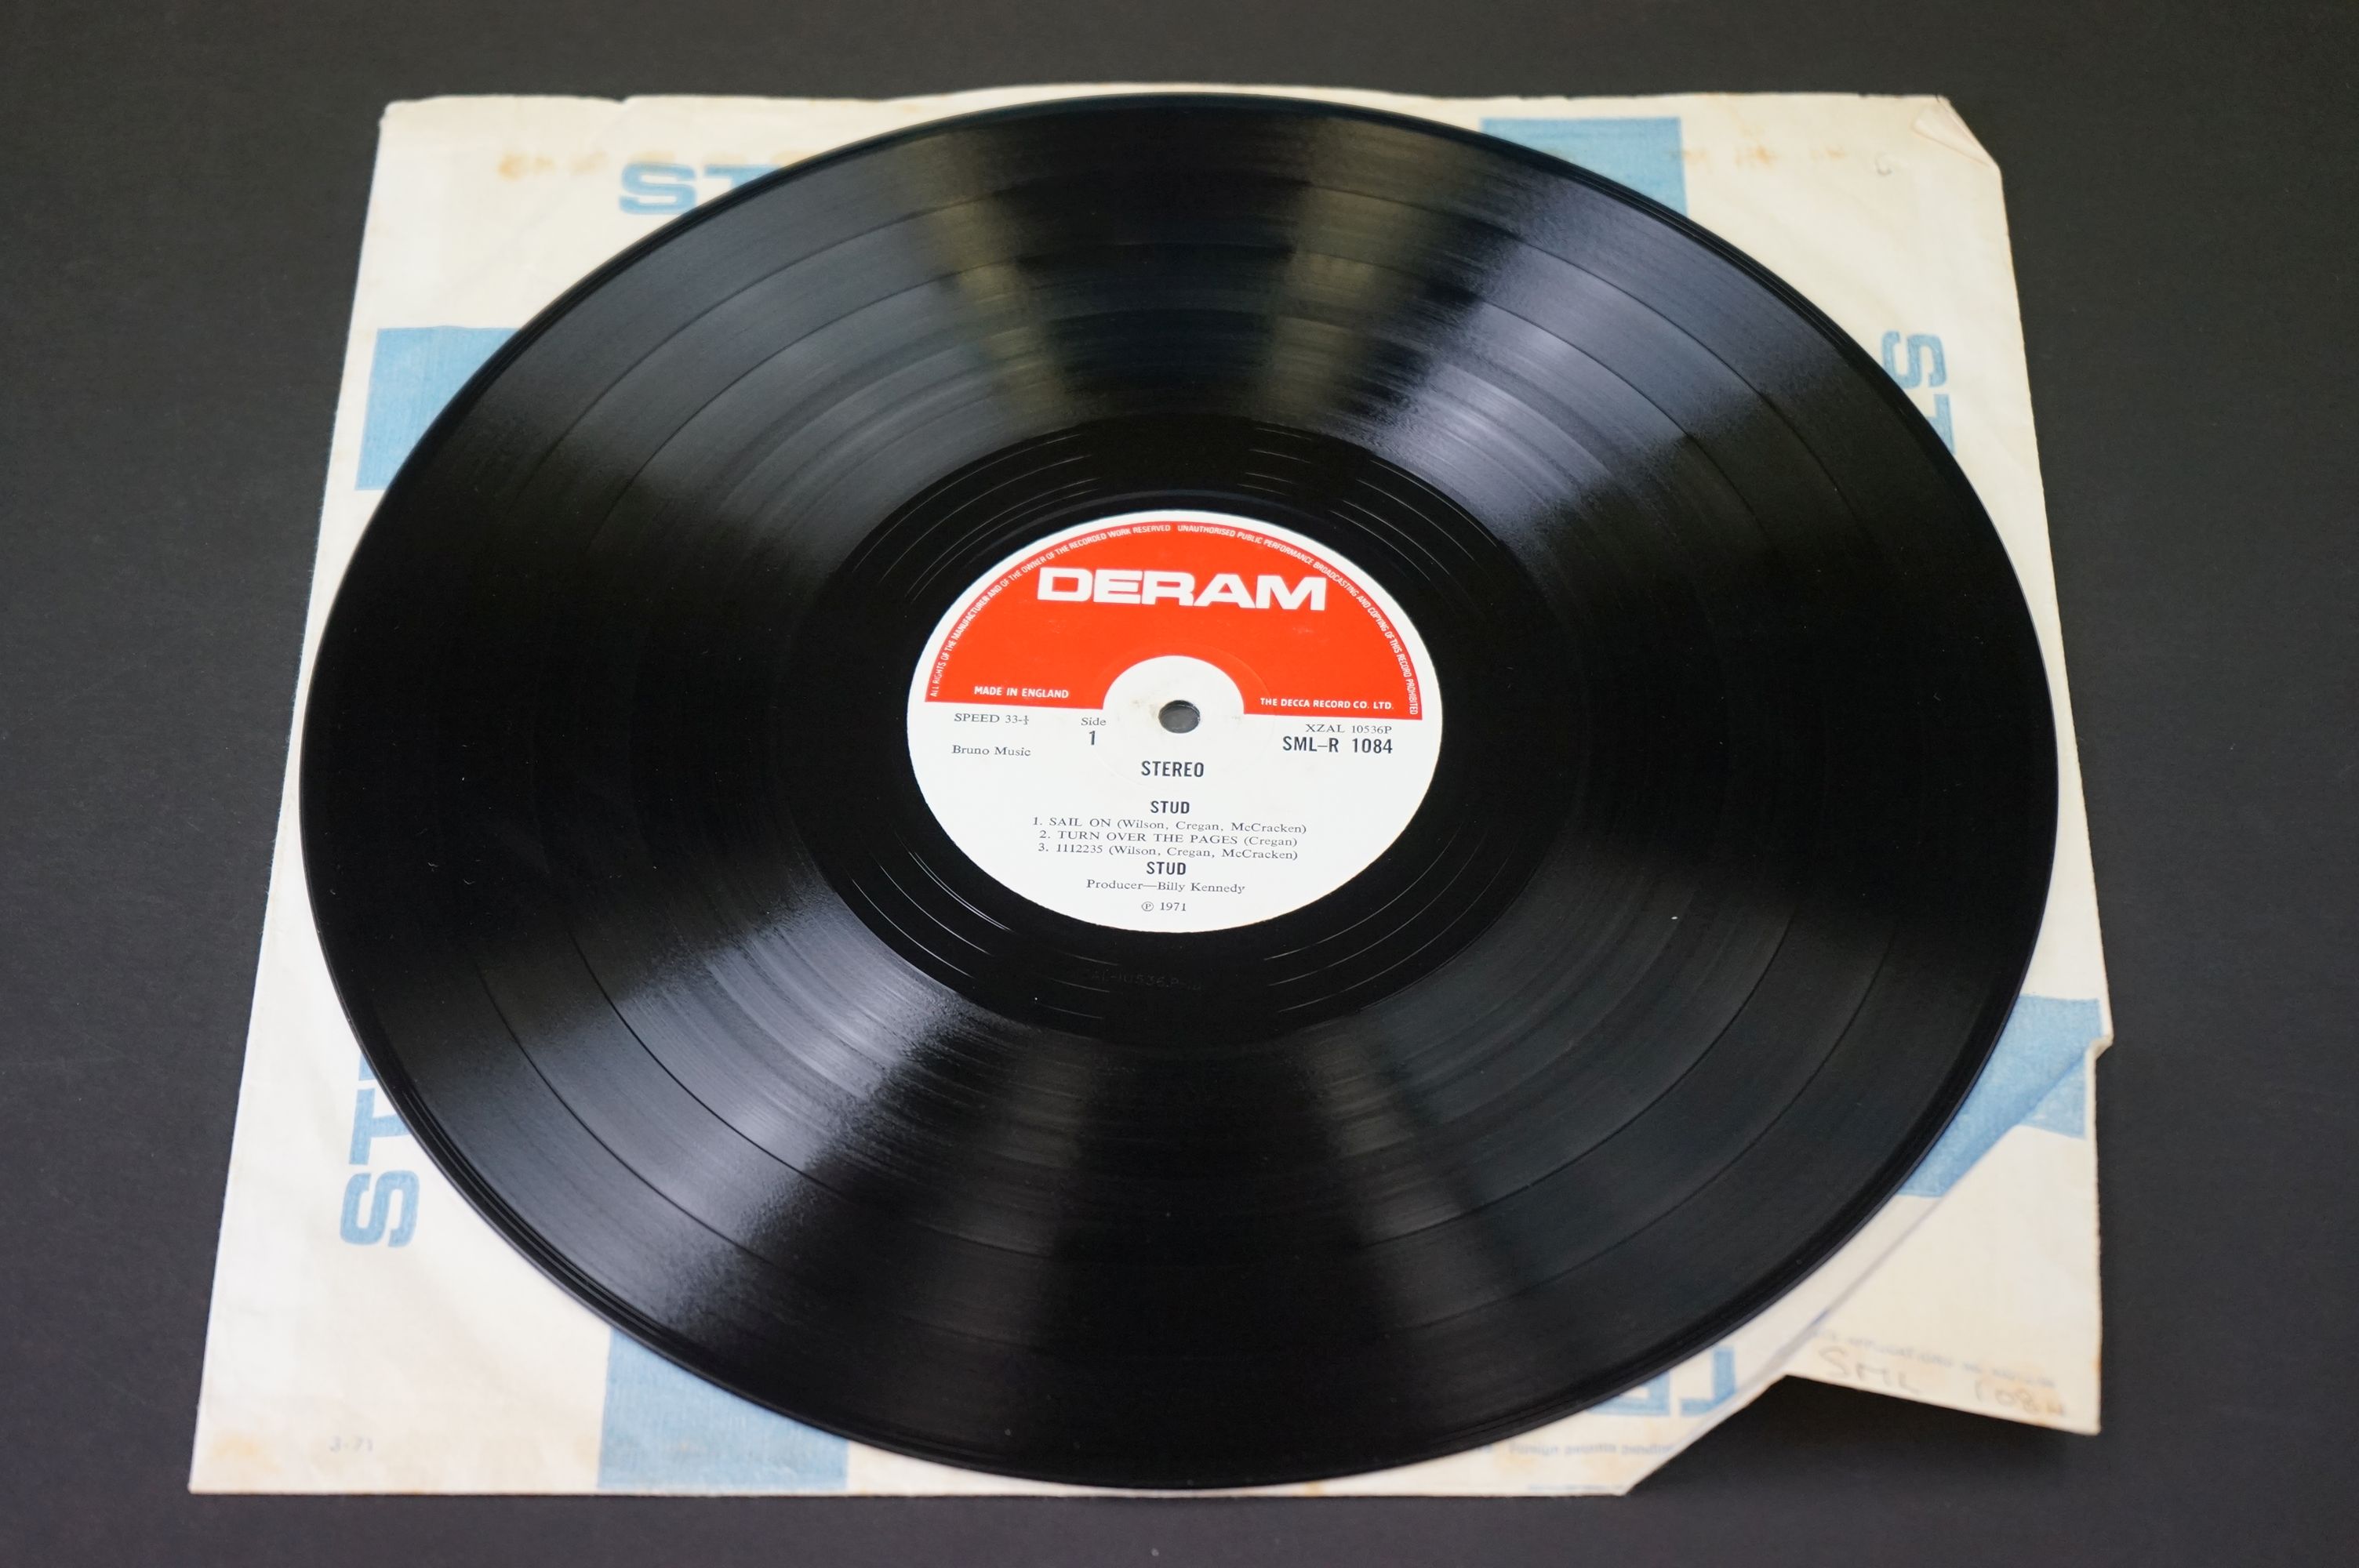 Vinyl - Stud - Stud, original UK 1971 1st pressing, Deram Records SML-R 1084, VG- / VG+ - Image 2 of 6